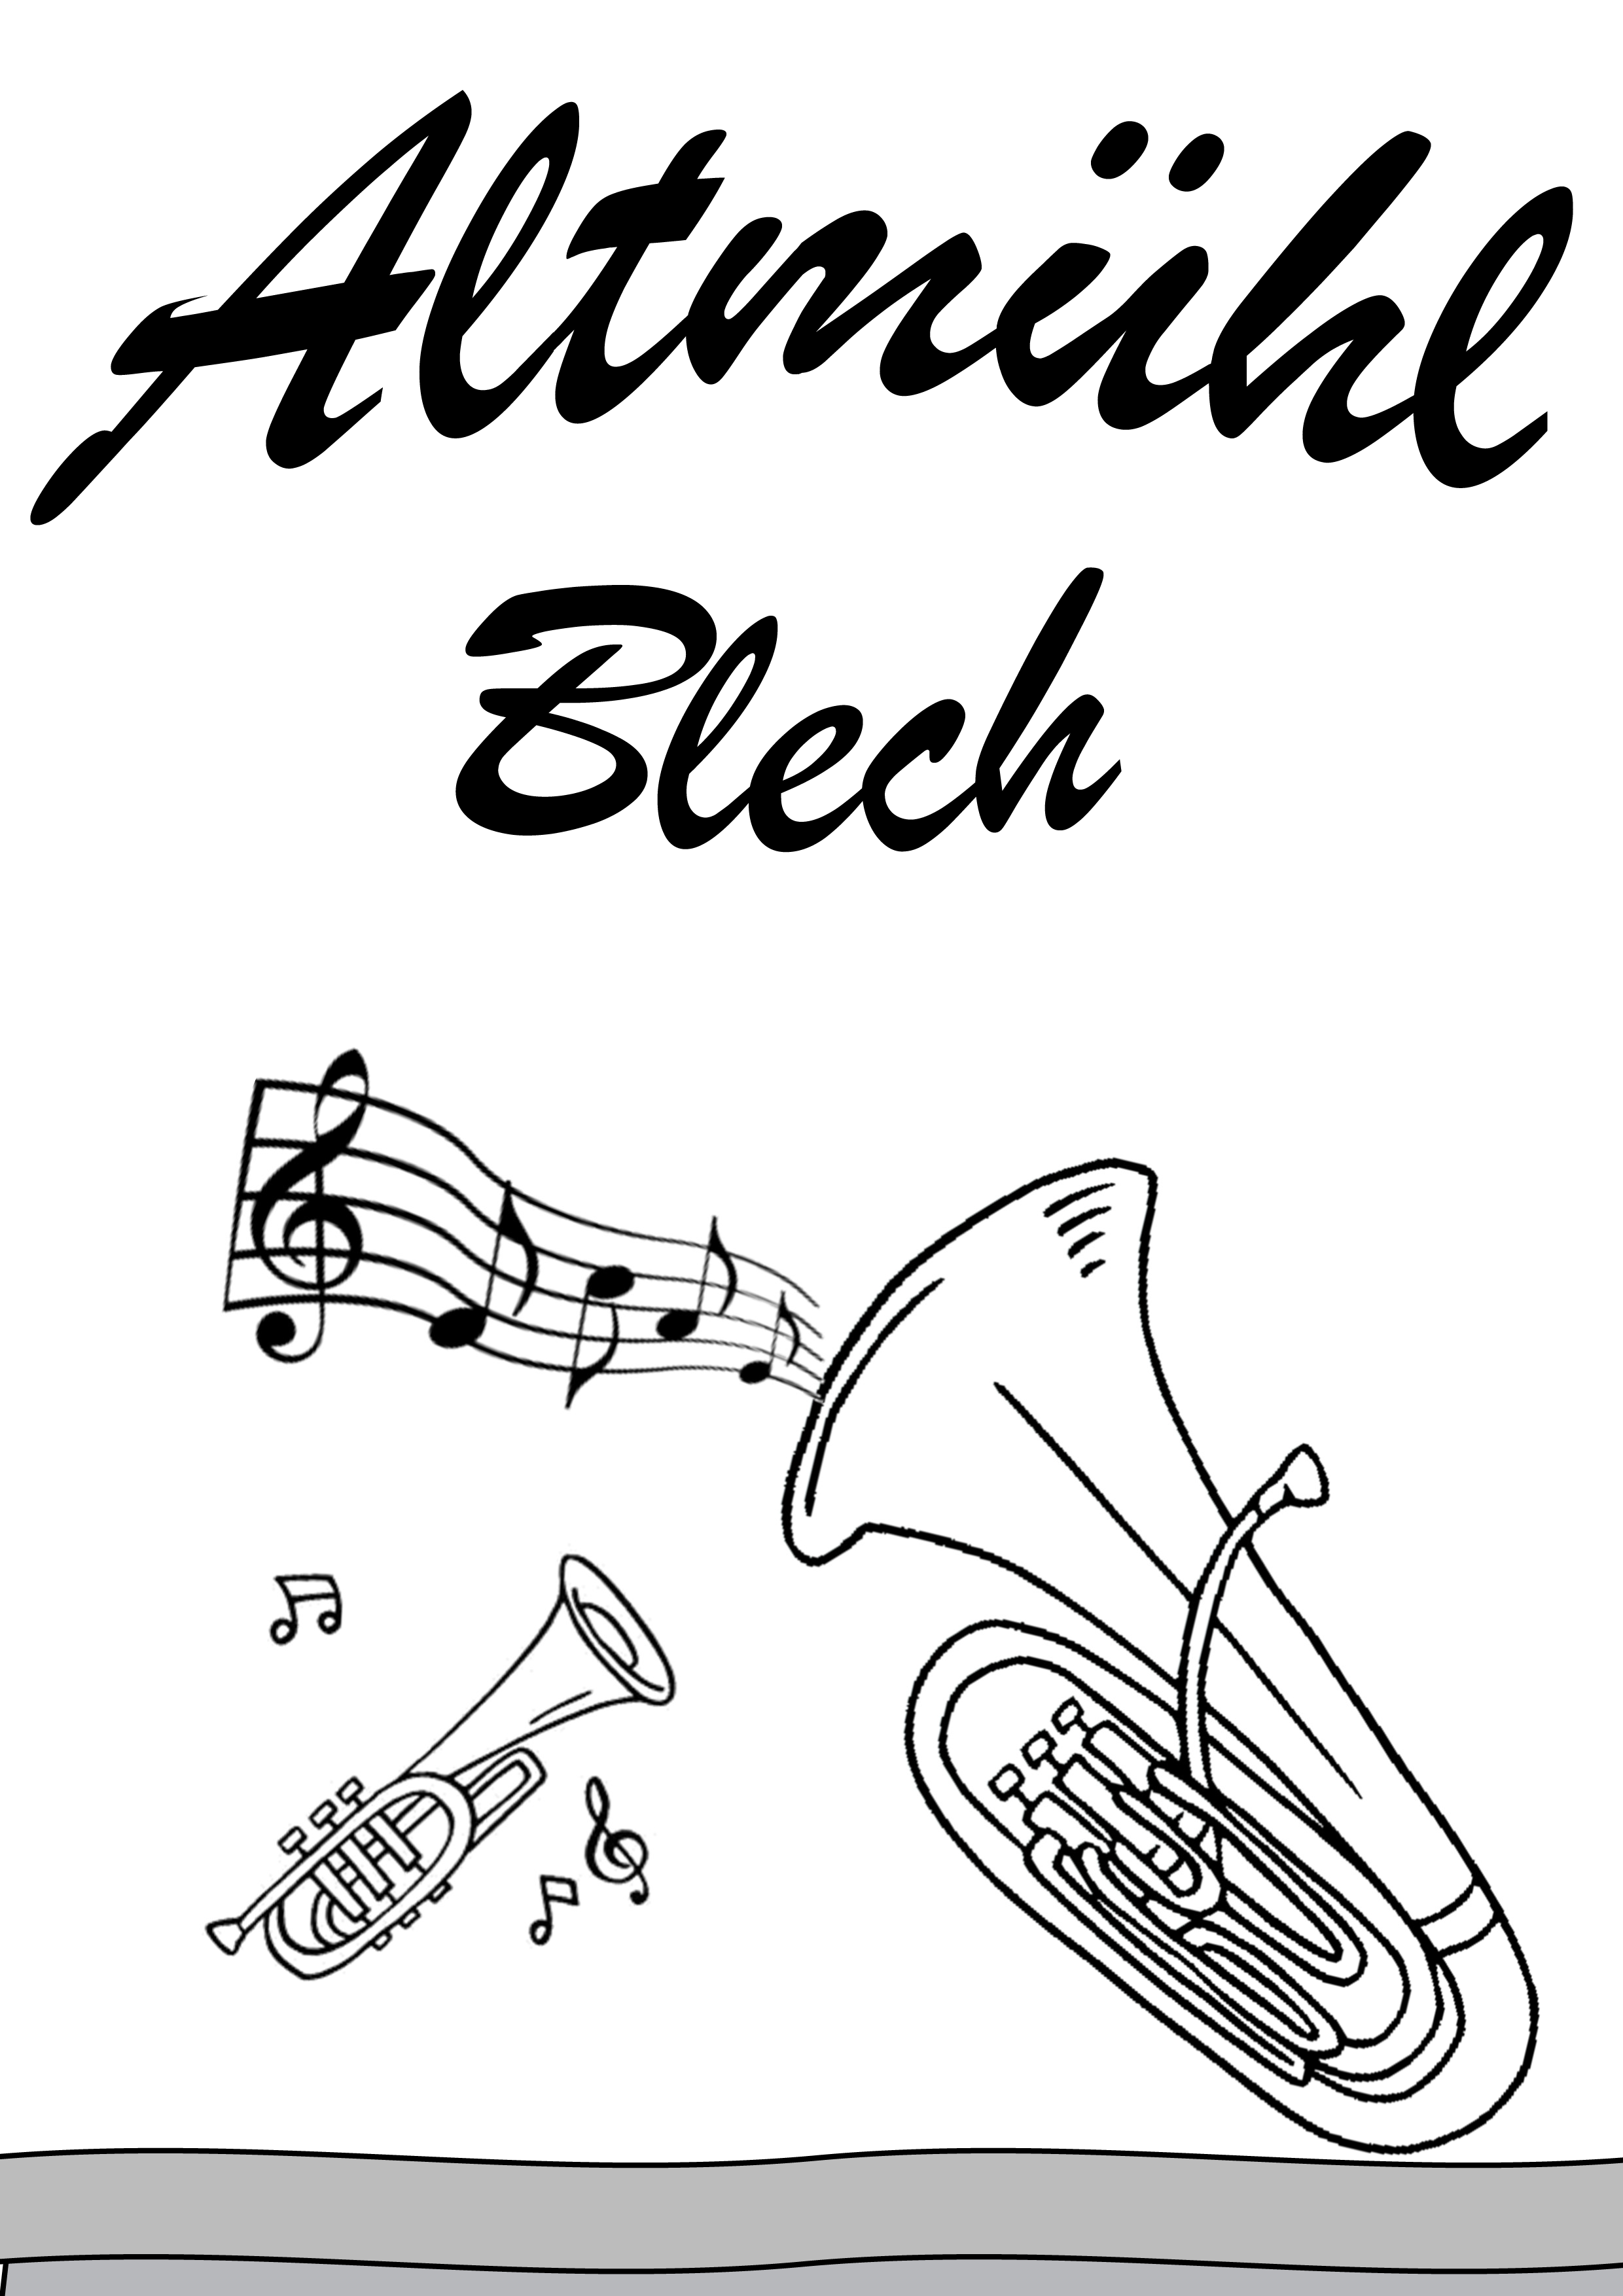 Logo Altmuhl Blech 2 v2